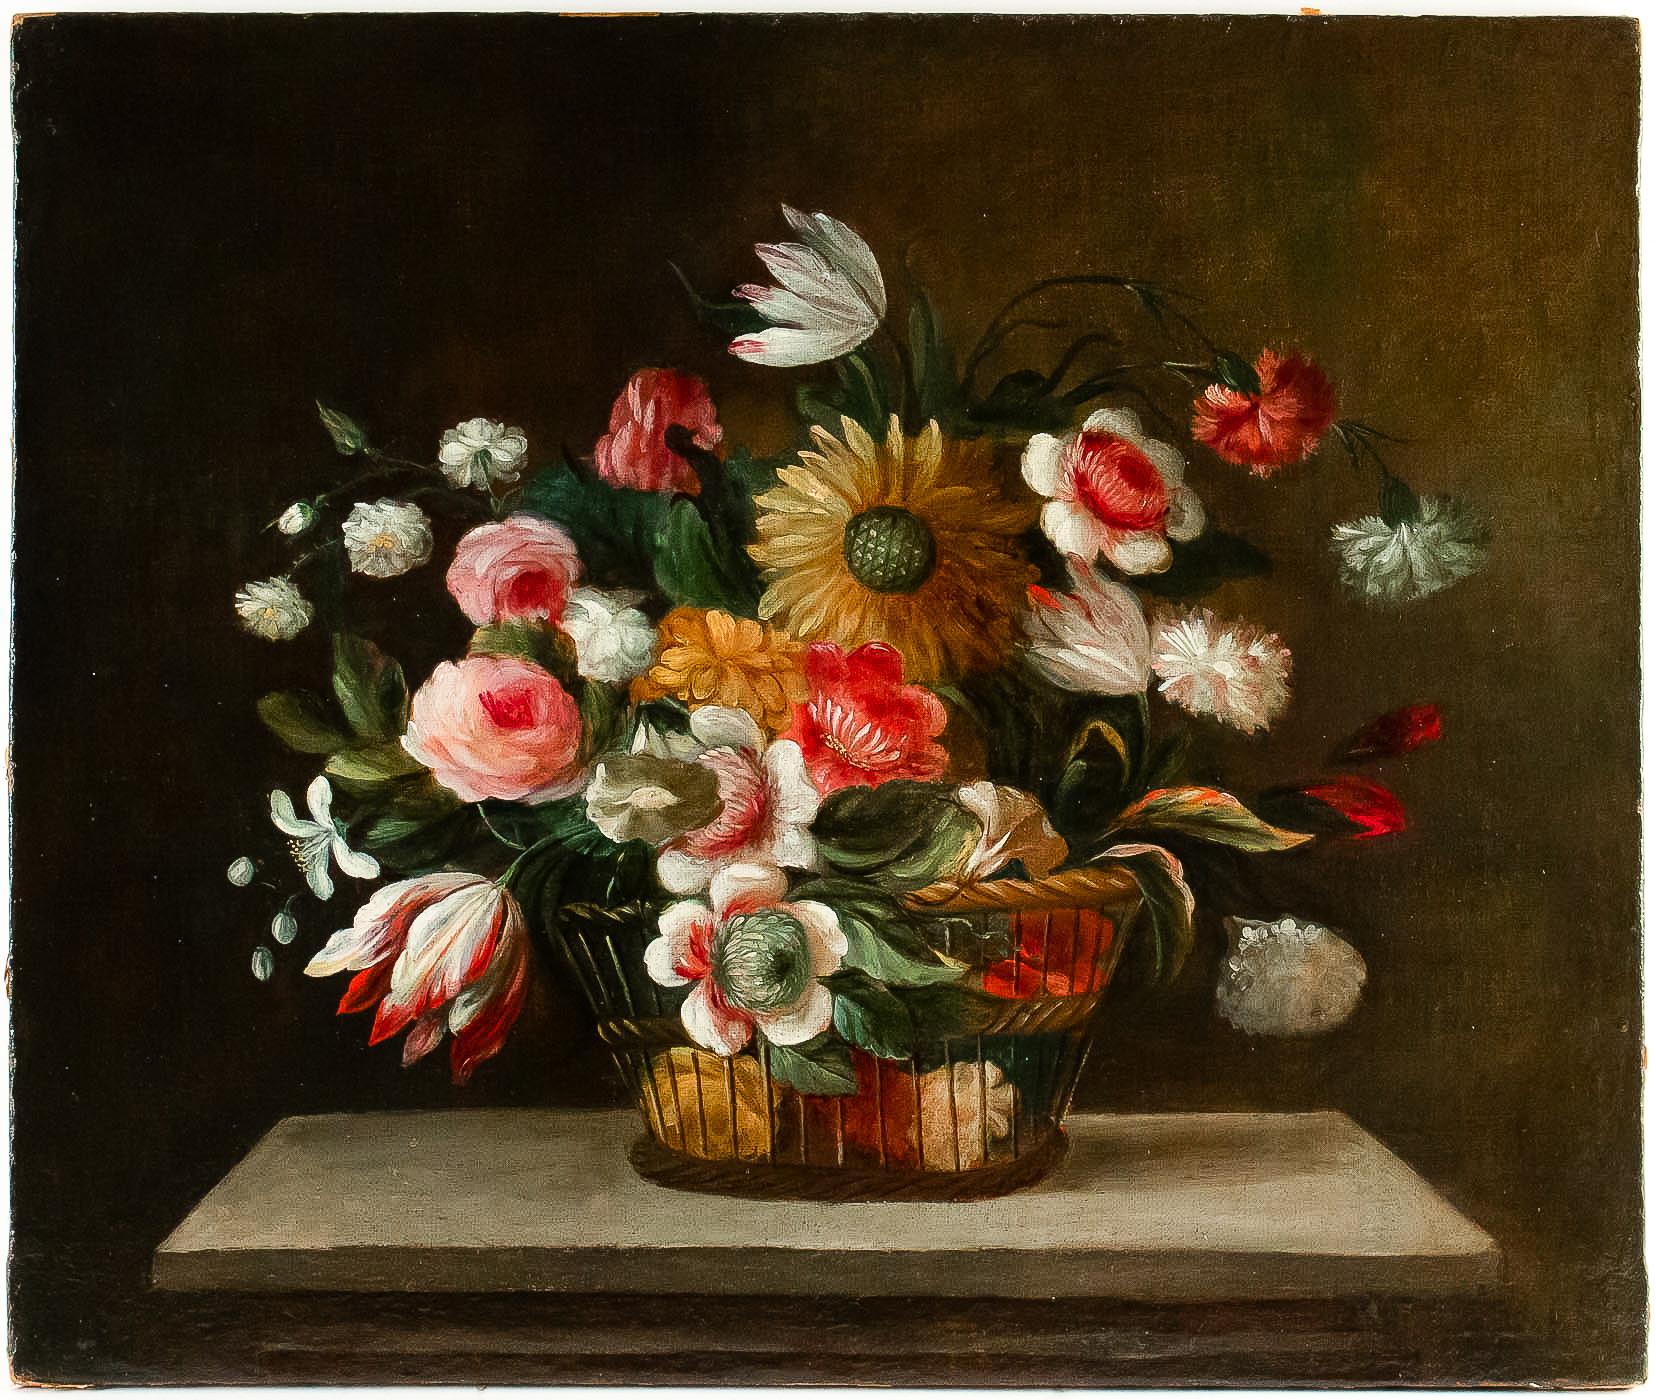 18th century flower paintings